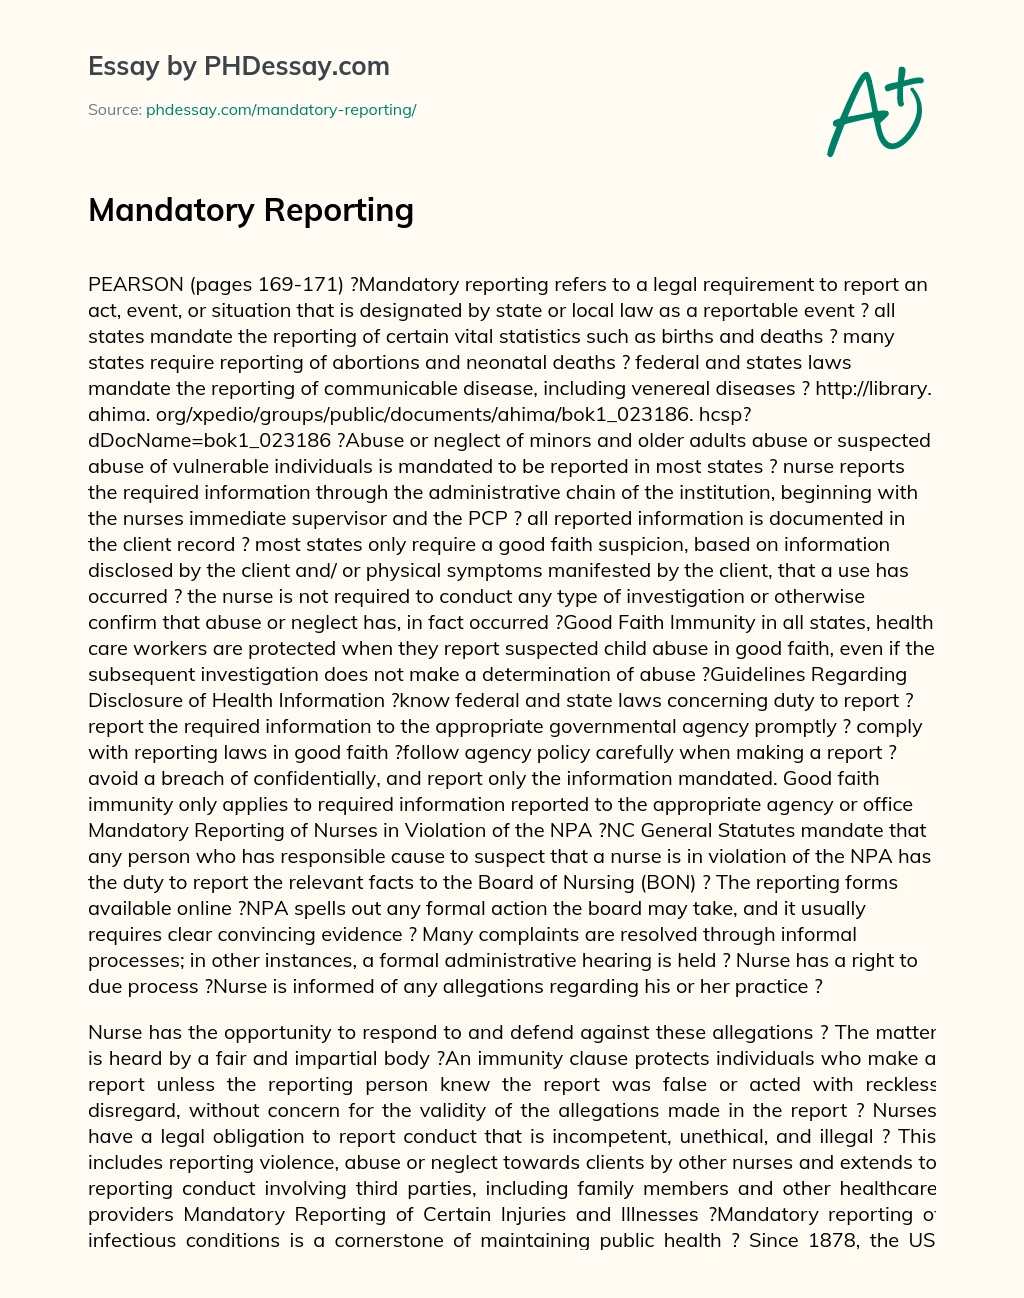 Mandatory Reporting essay